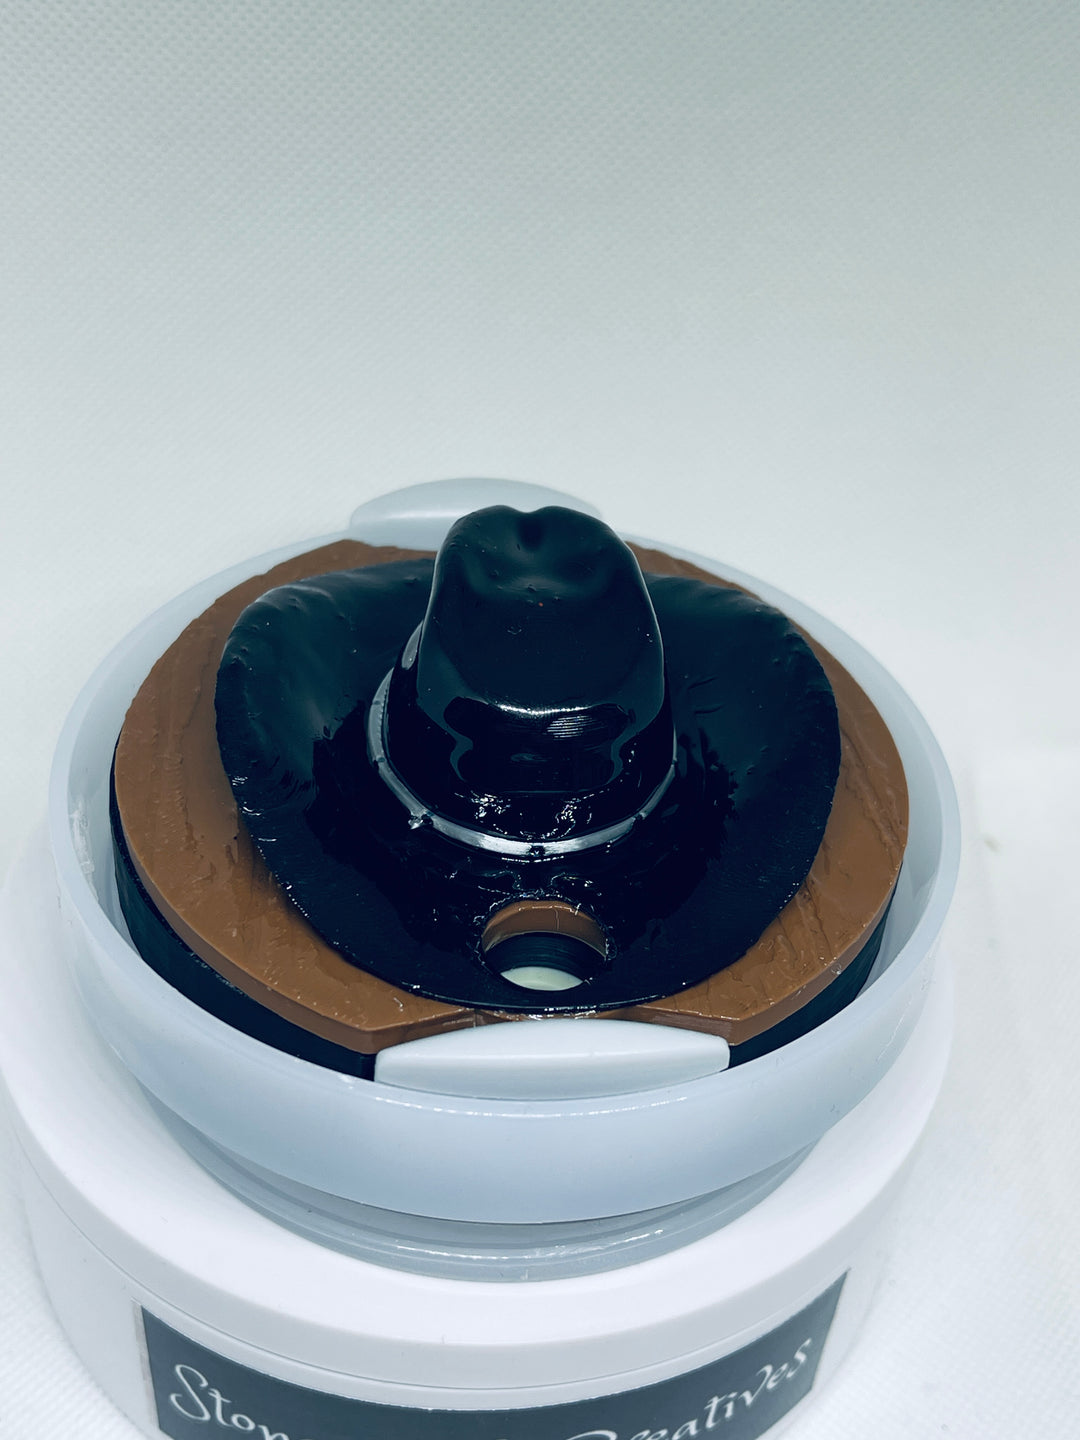 Cowboy Hat 40 oz tumbler topper, Rodeo themed tumbler topper, 3D Decorative Lid Attachment